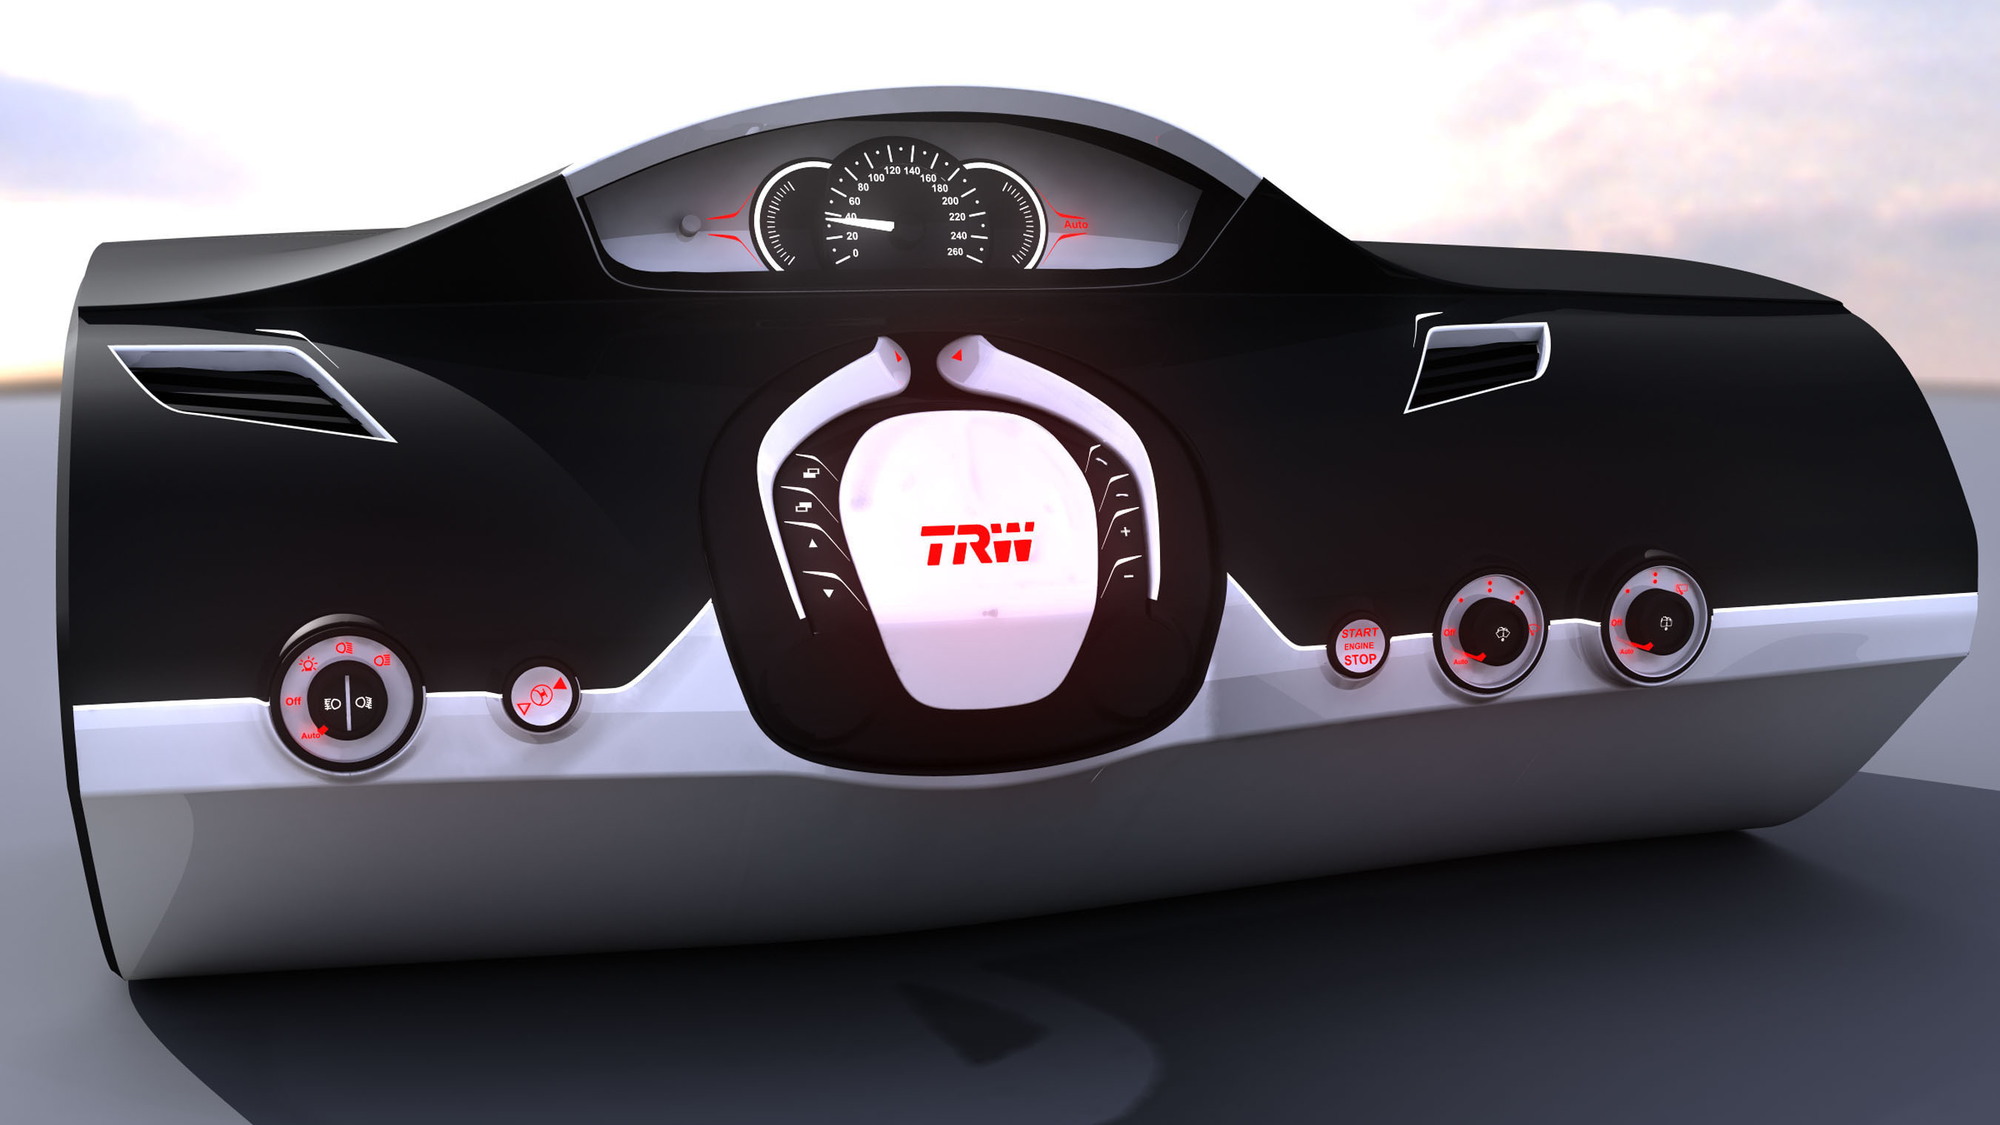 TRW's folding steering wheel concept